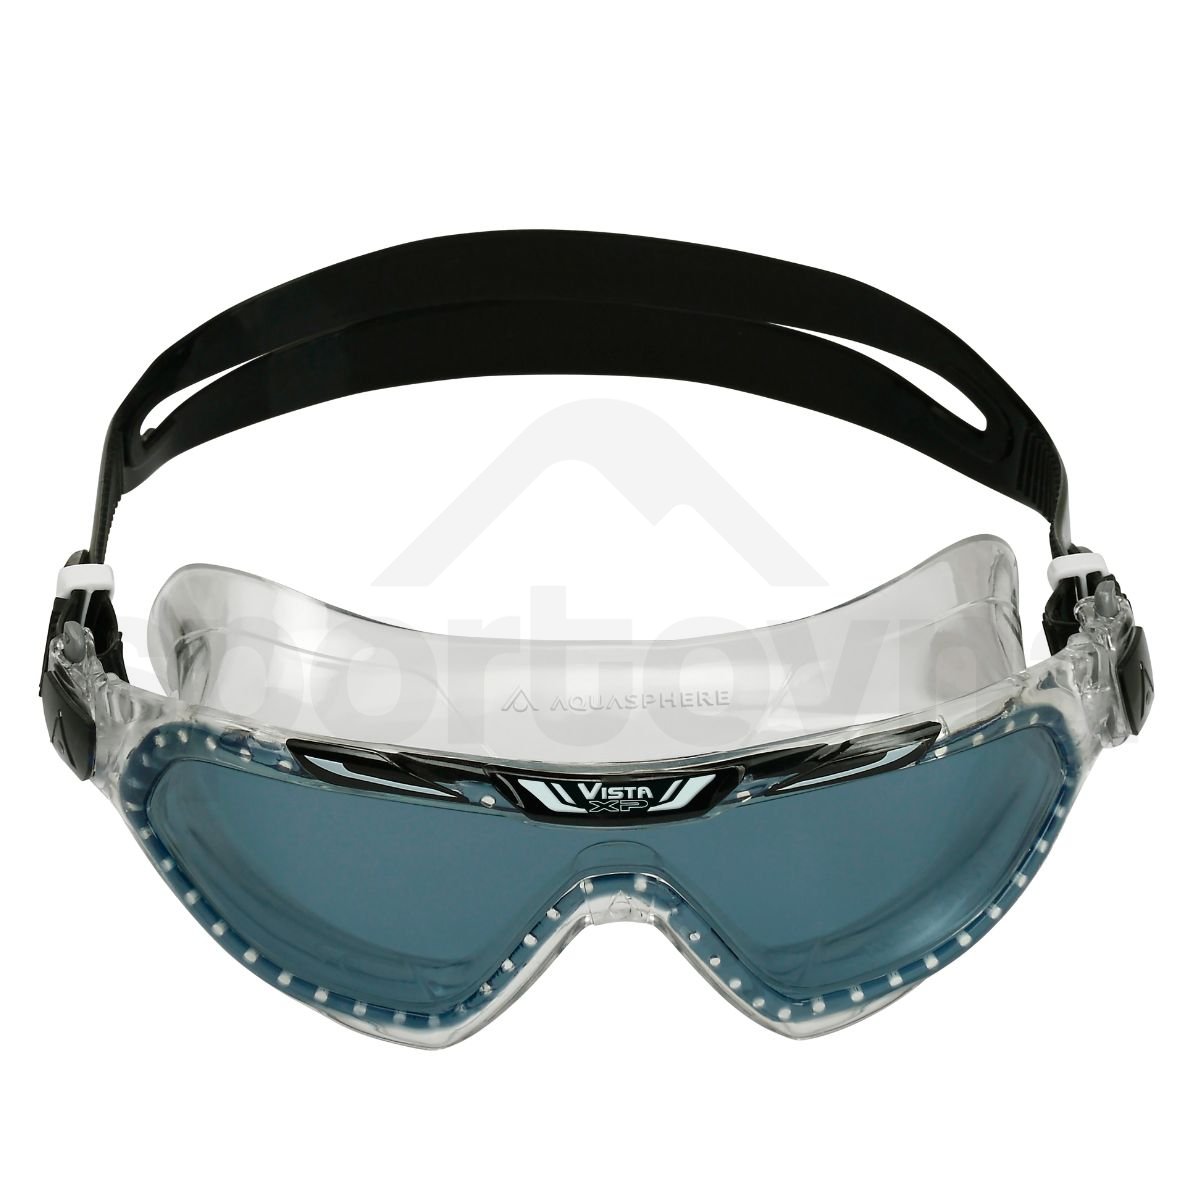 Brýle AquaLung VISTA XP - černá